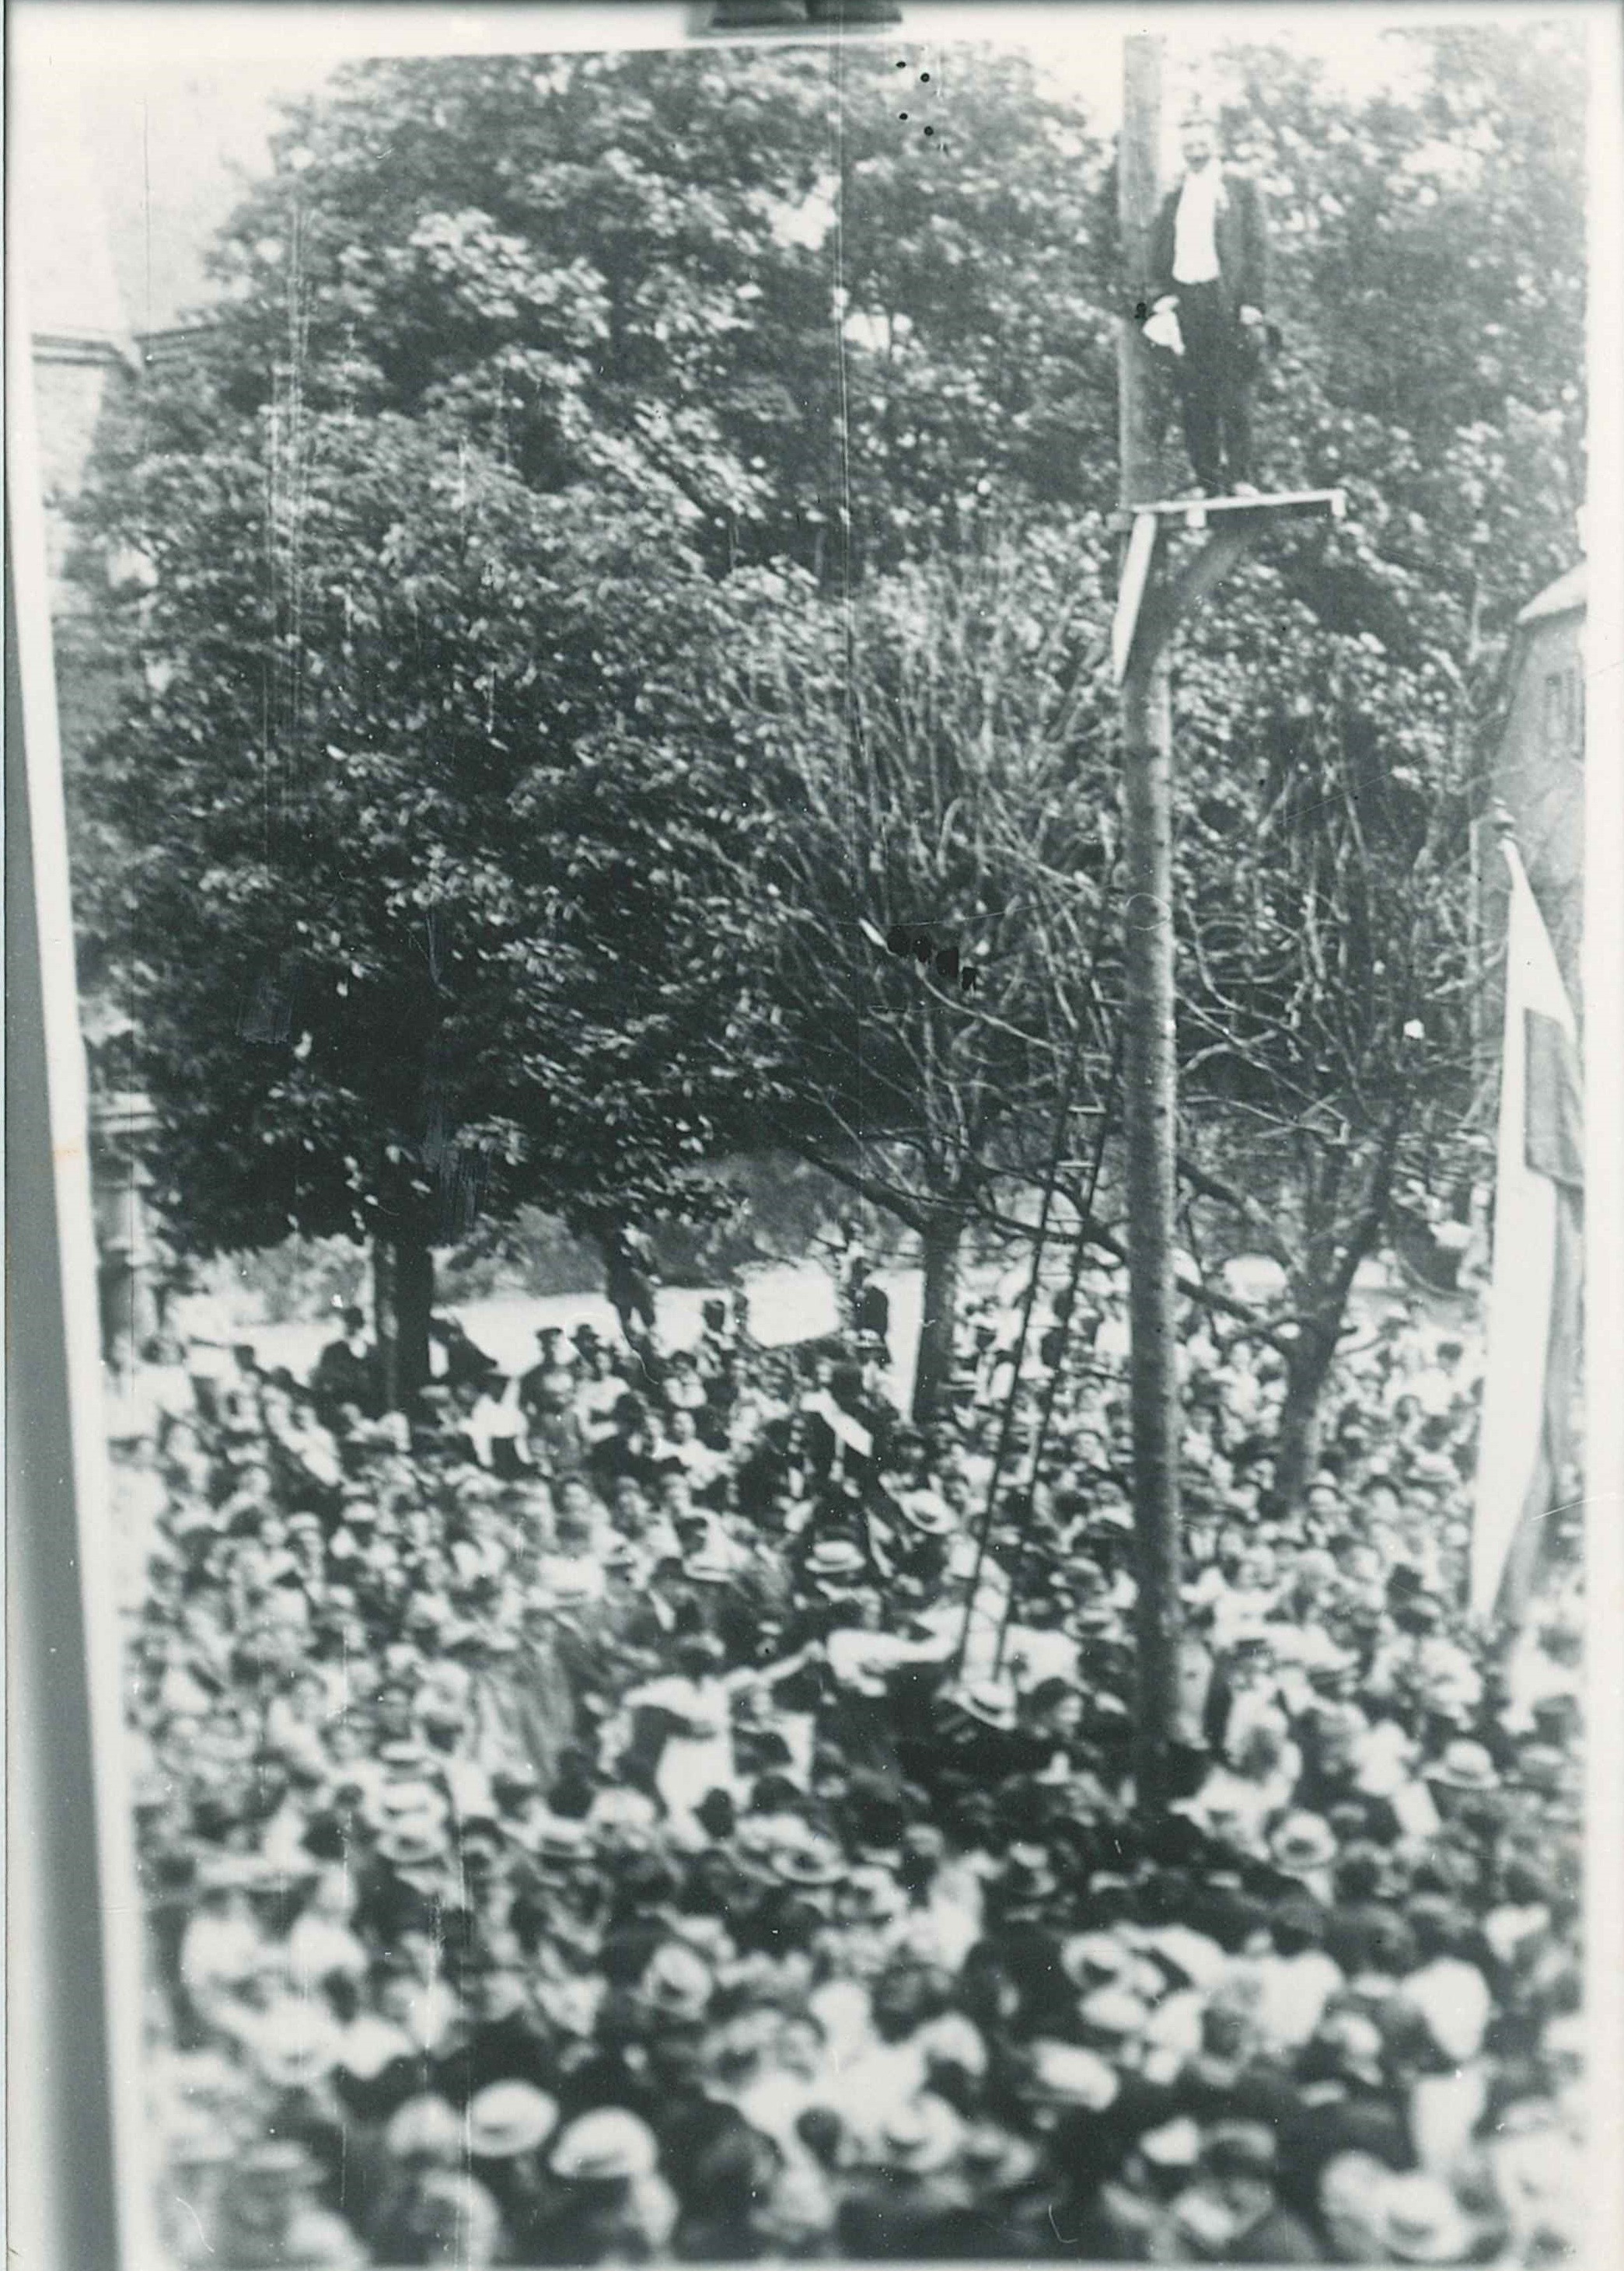 Festansprache zur Bendorfer Kirmes, 1923 (REM CC BY-NC-SA)